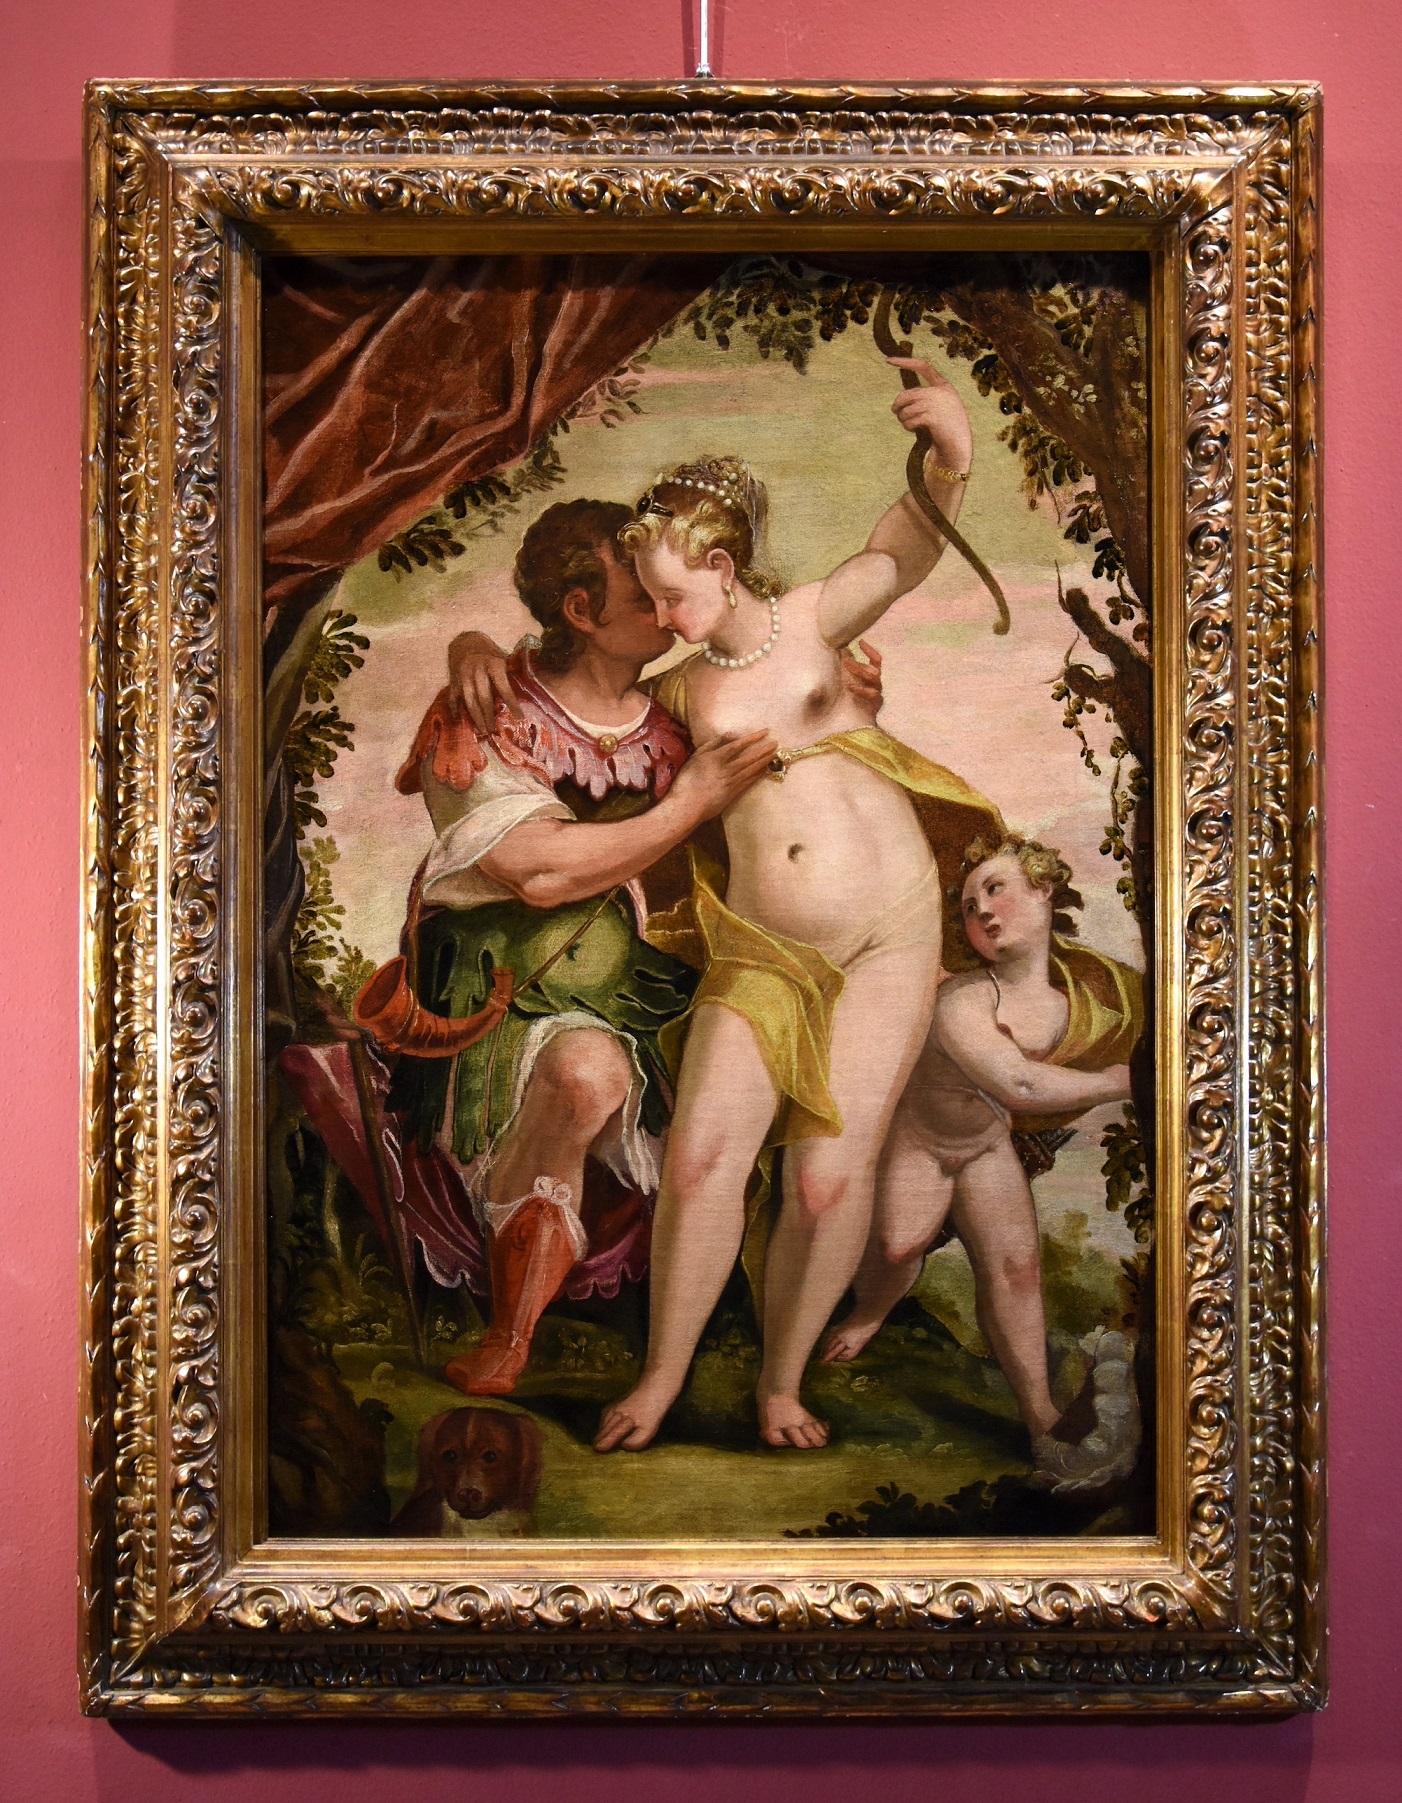 Paolo Caliari dit Véronèse (Vérone 1528 - Venise 1588) Landscape Painting - Venus Cupid Véronèse Paint Oil on canvas 16/17th Century Old master Mythological